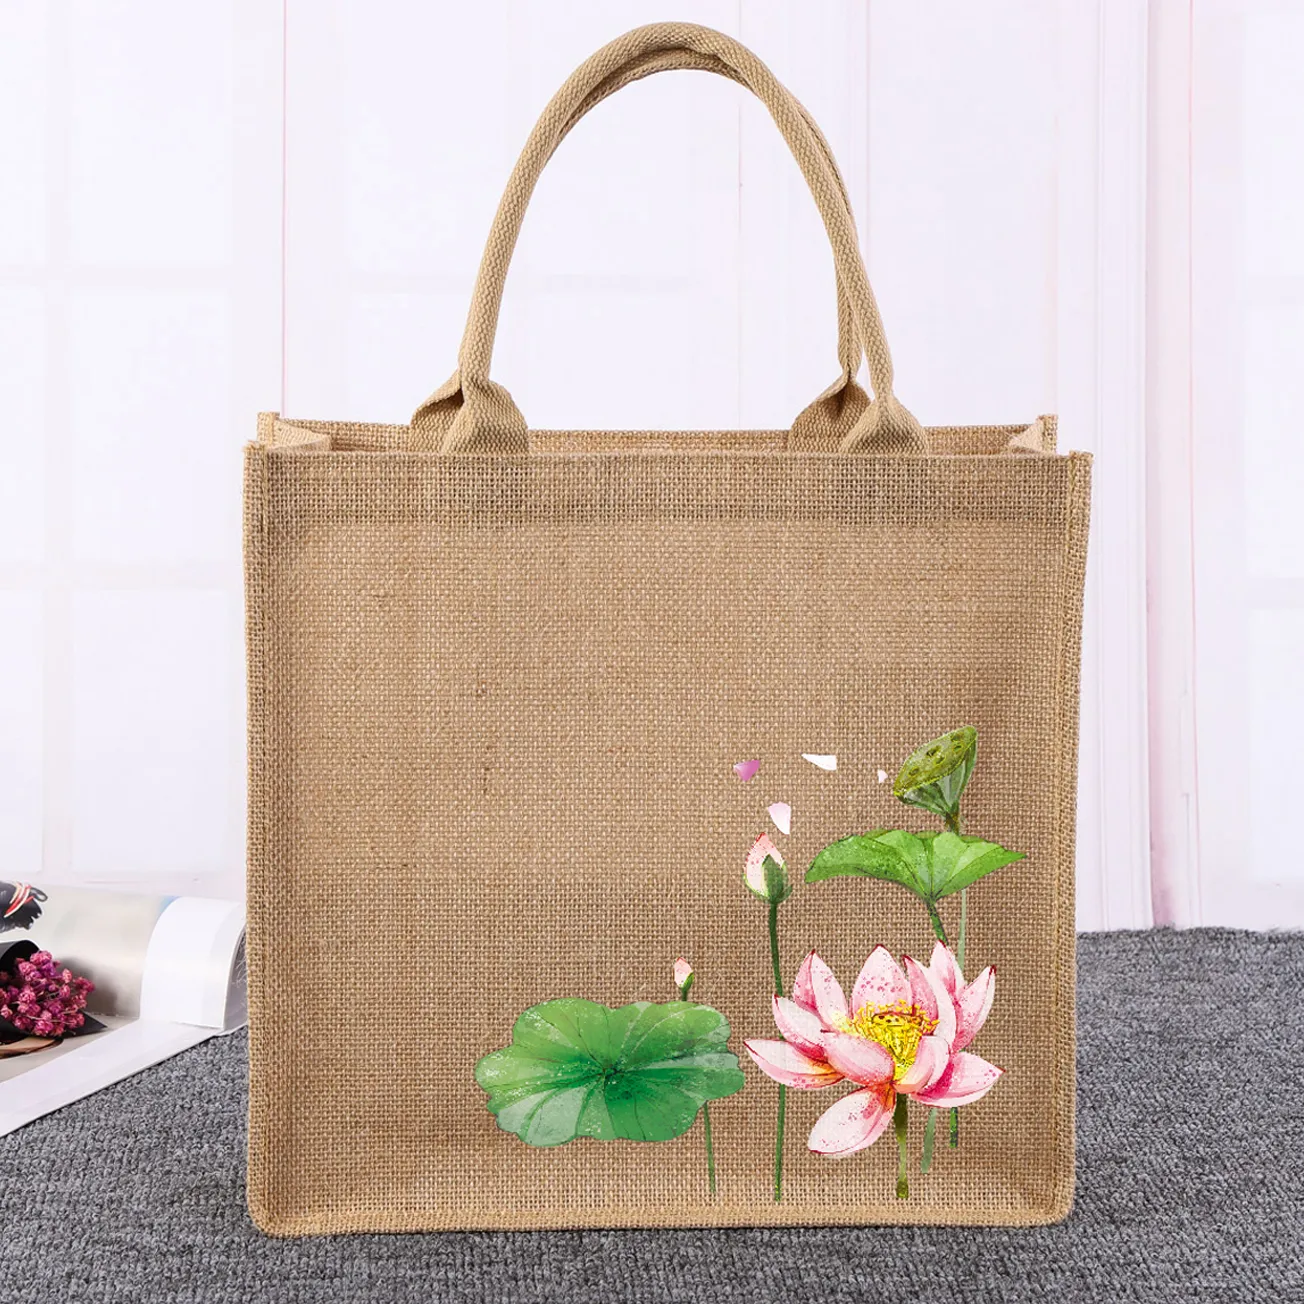 New Printed Jute Bag At Low Price,Customized Eco Big Jute Bag,Khaki Colour Jute  Bag From Livelovelaught, $2.54 | DHgate.Com